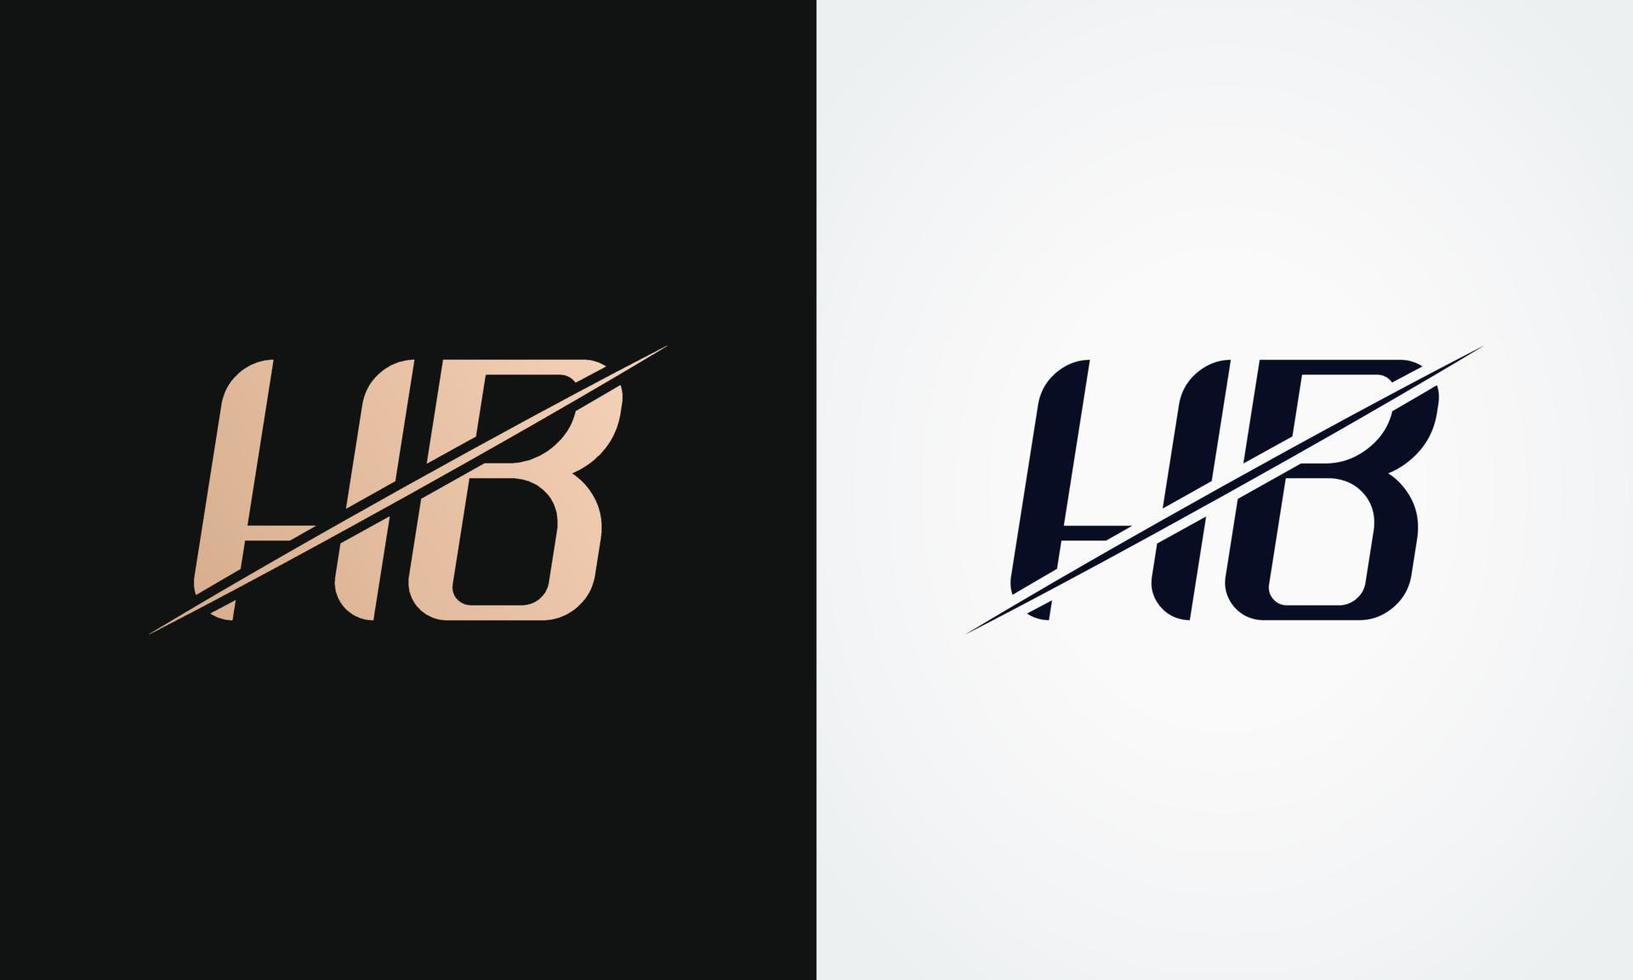 hb brev logotyp design vektor mall. guld och svart brev hb logotyp design